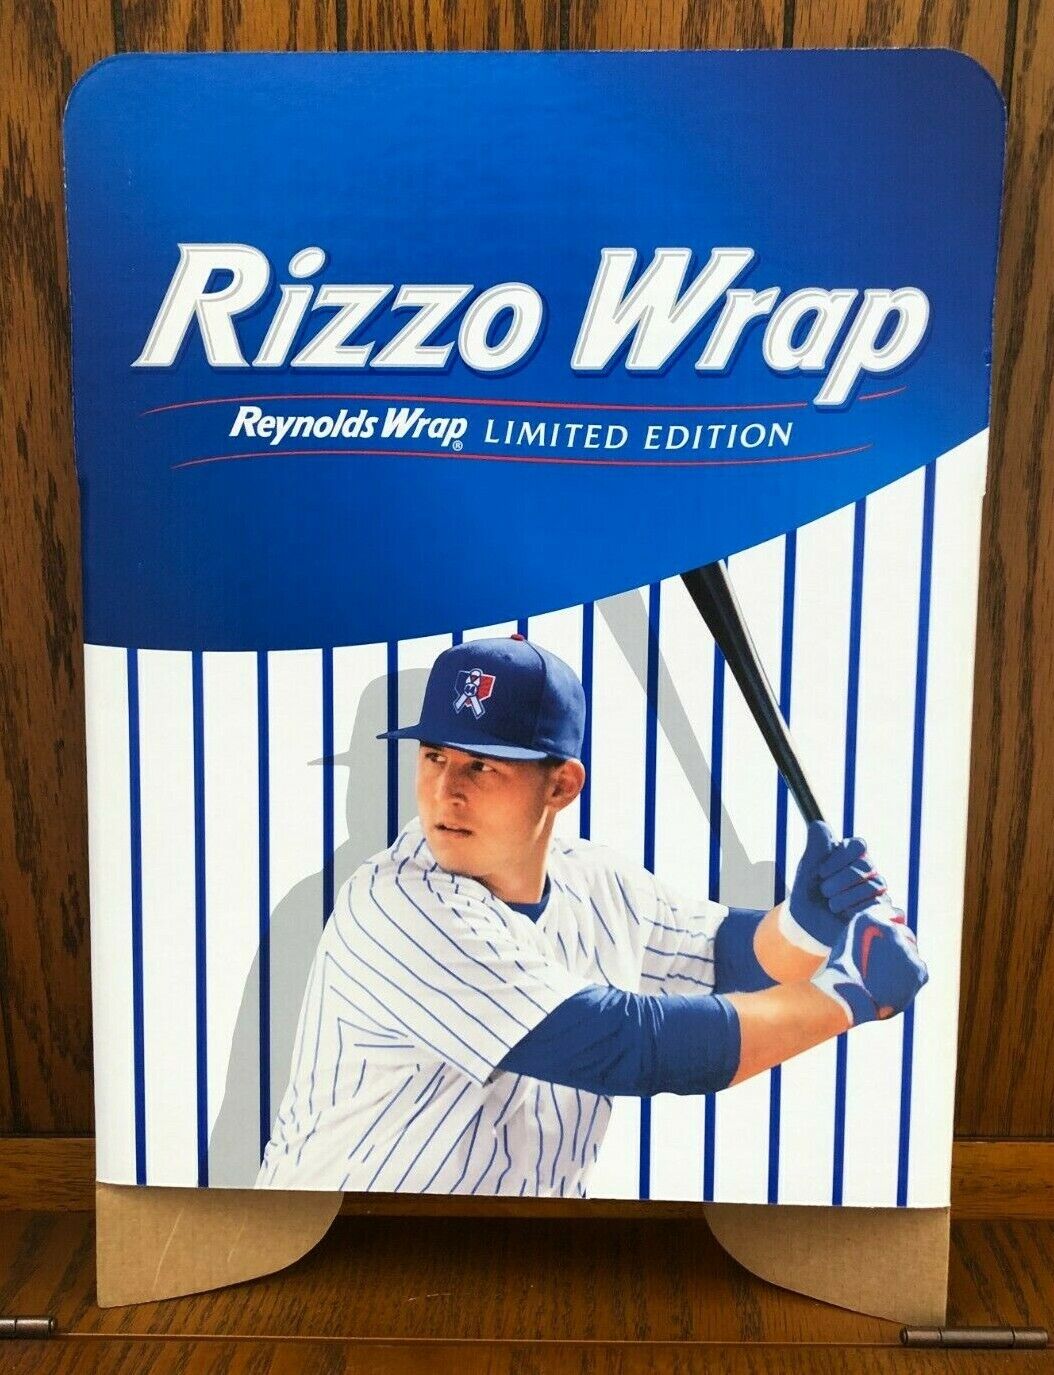 Rare Anthony Rizzo Wrap Cardboard Promo Advertisement Ad Display Header